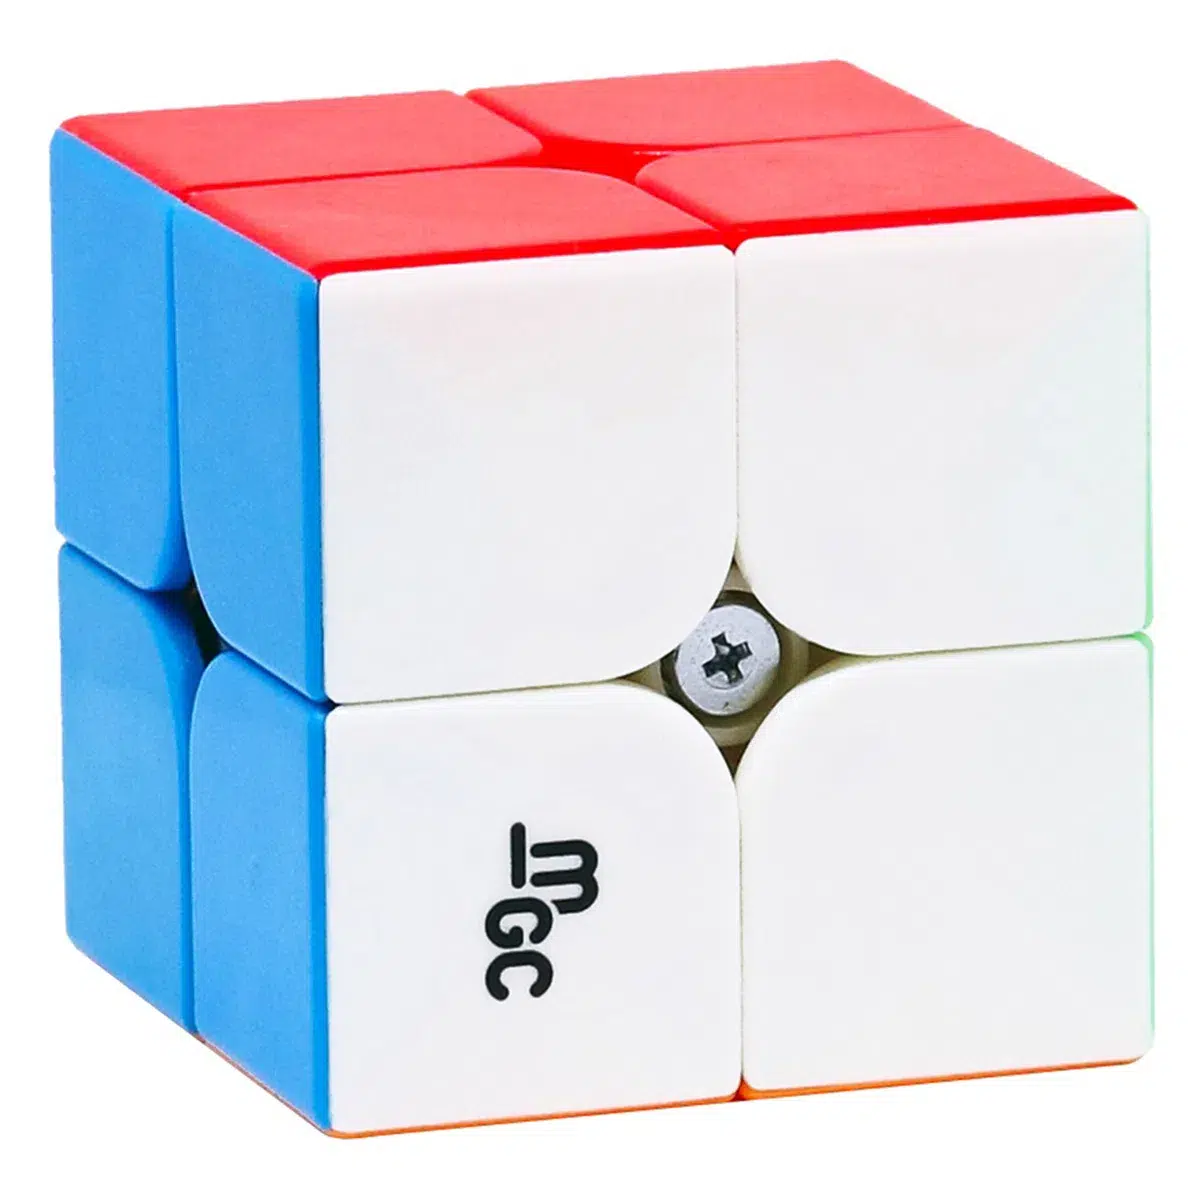 2x2 Speed Cube YJ MGC 2x2 M - Stickerlos